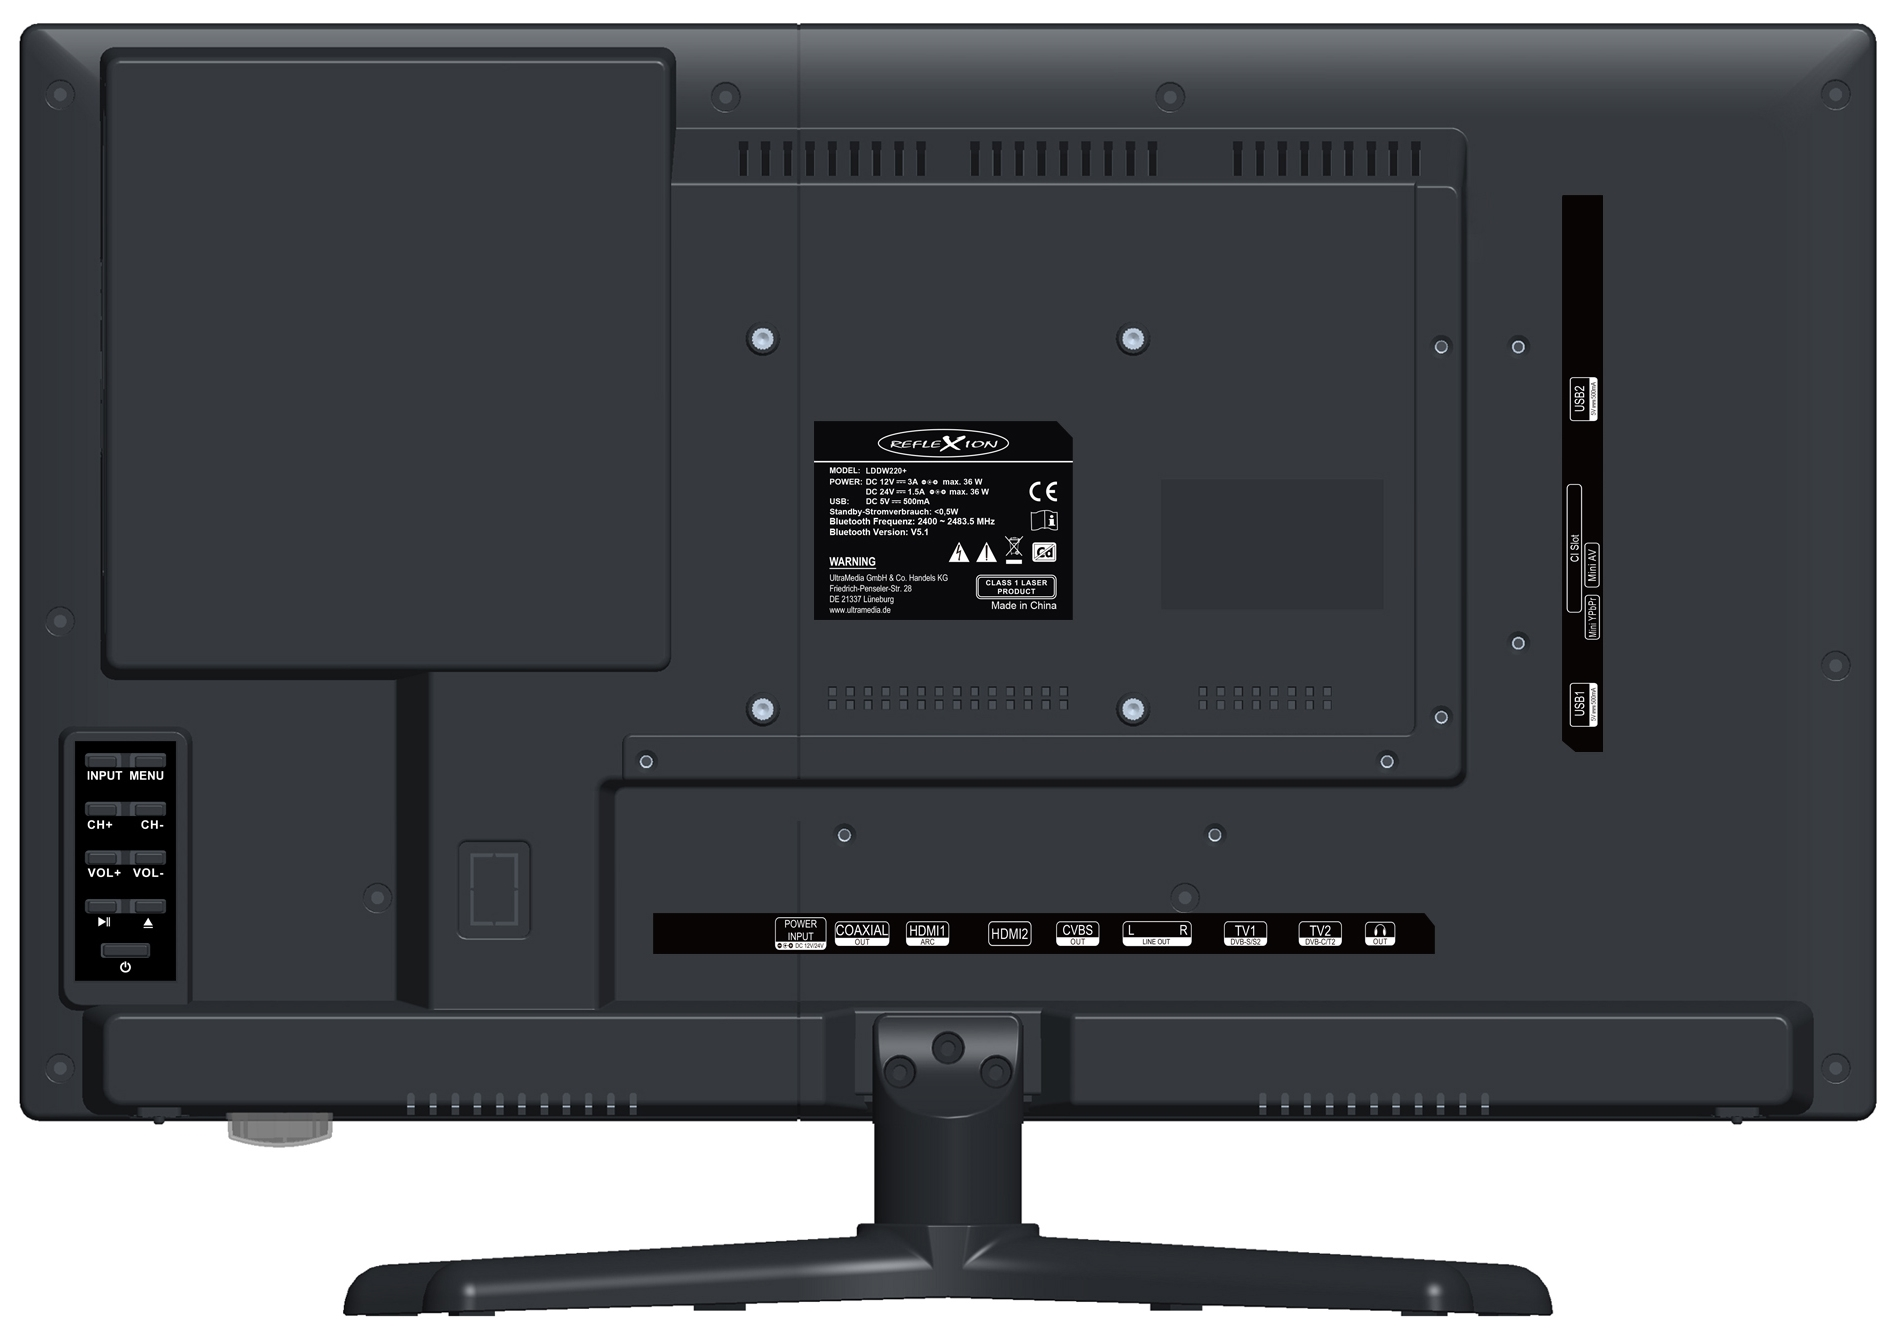 REFLEXION LDDW220+ LED TV Full-HD) / 55 Zoll cm, 22 (Flat